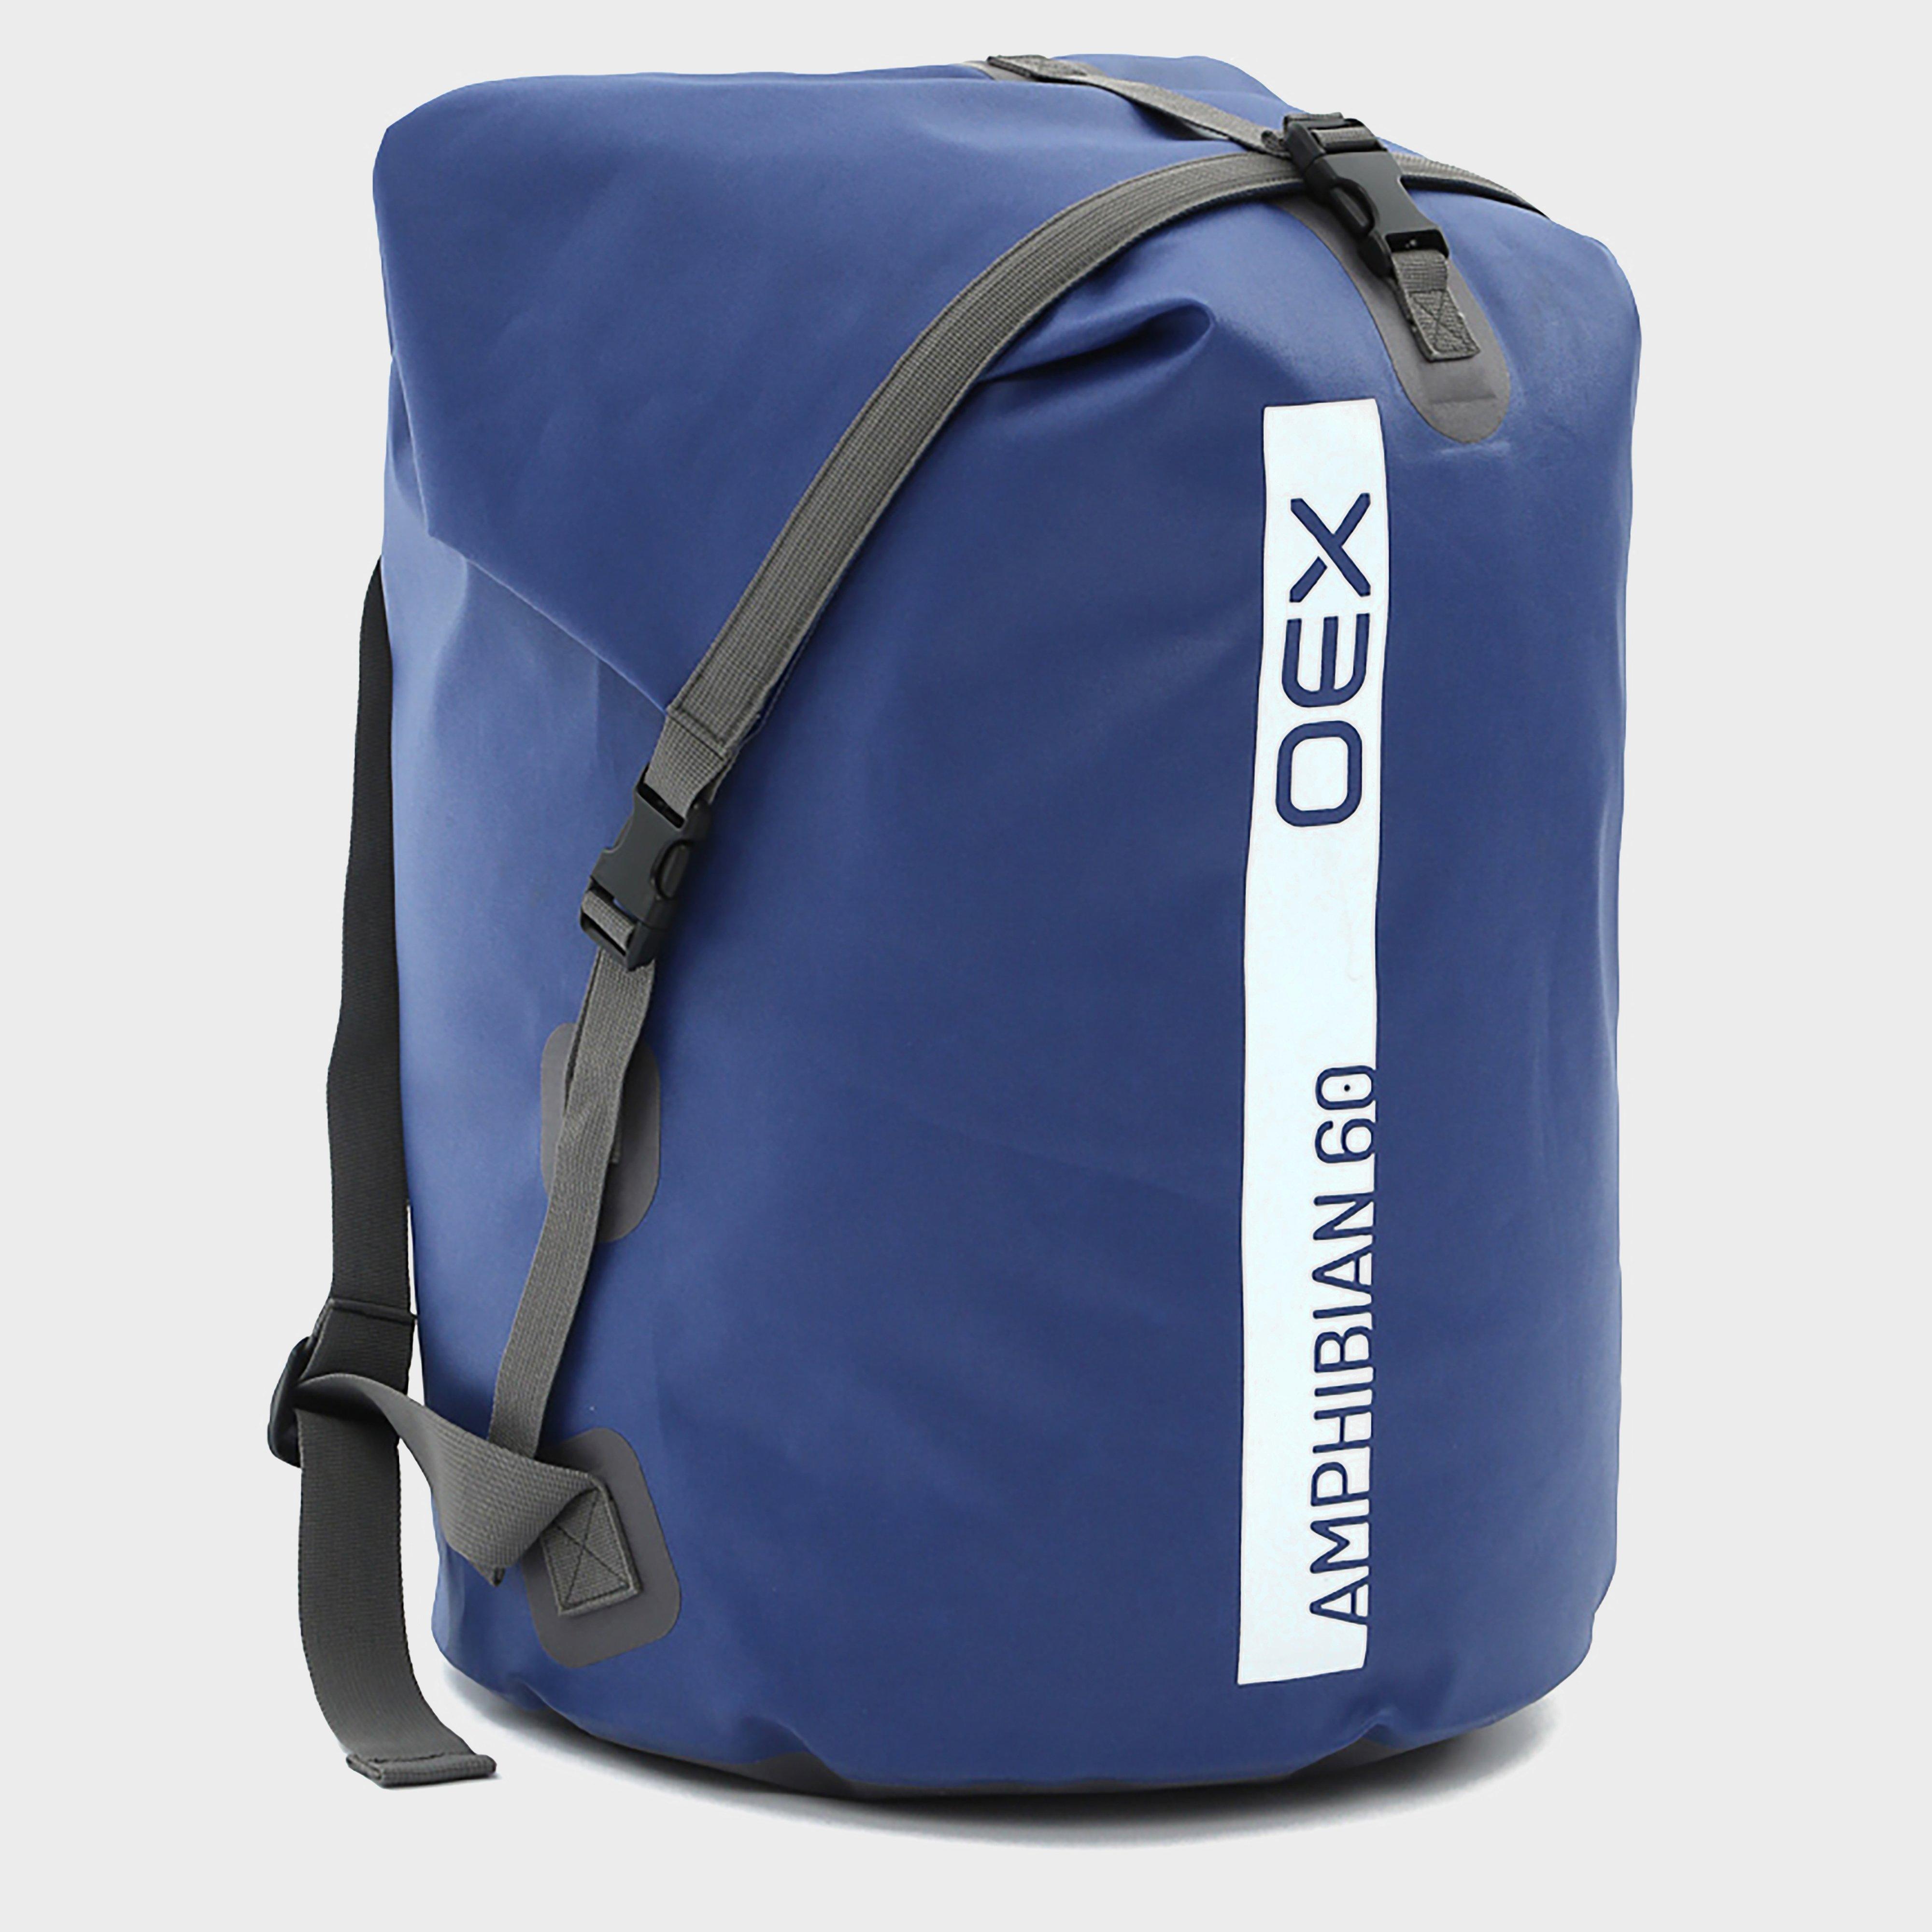 Amphibian Waterproof Bag (60L) - Blue, Blue